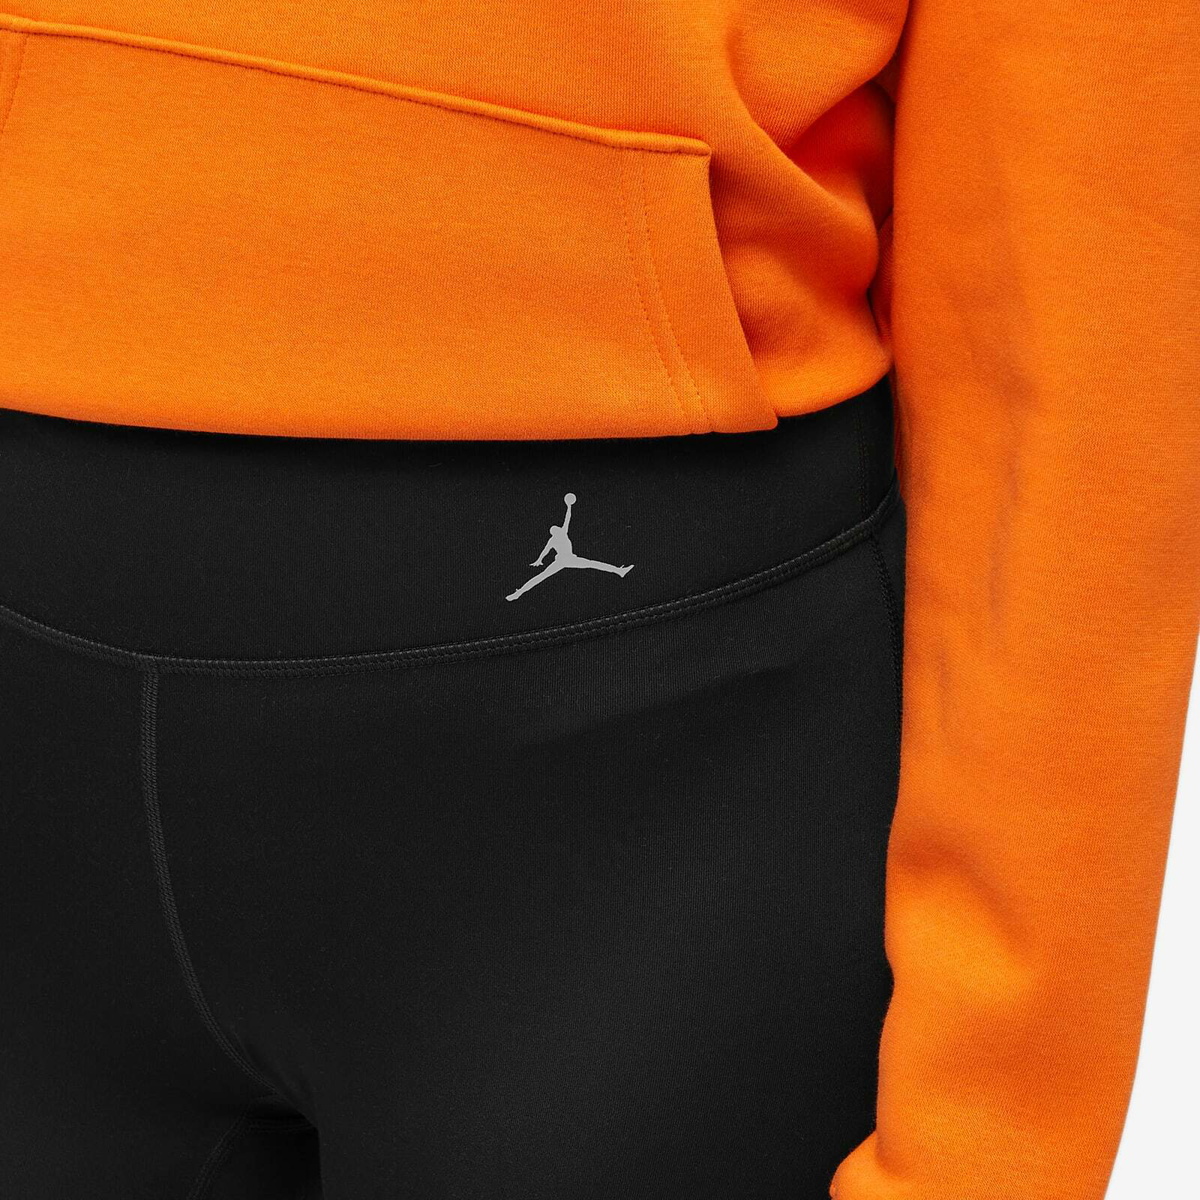 Air Jordan Women's Sport Legging W in Black/ Stealth Nike Jordan Brand